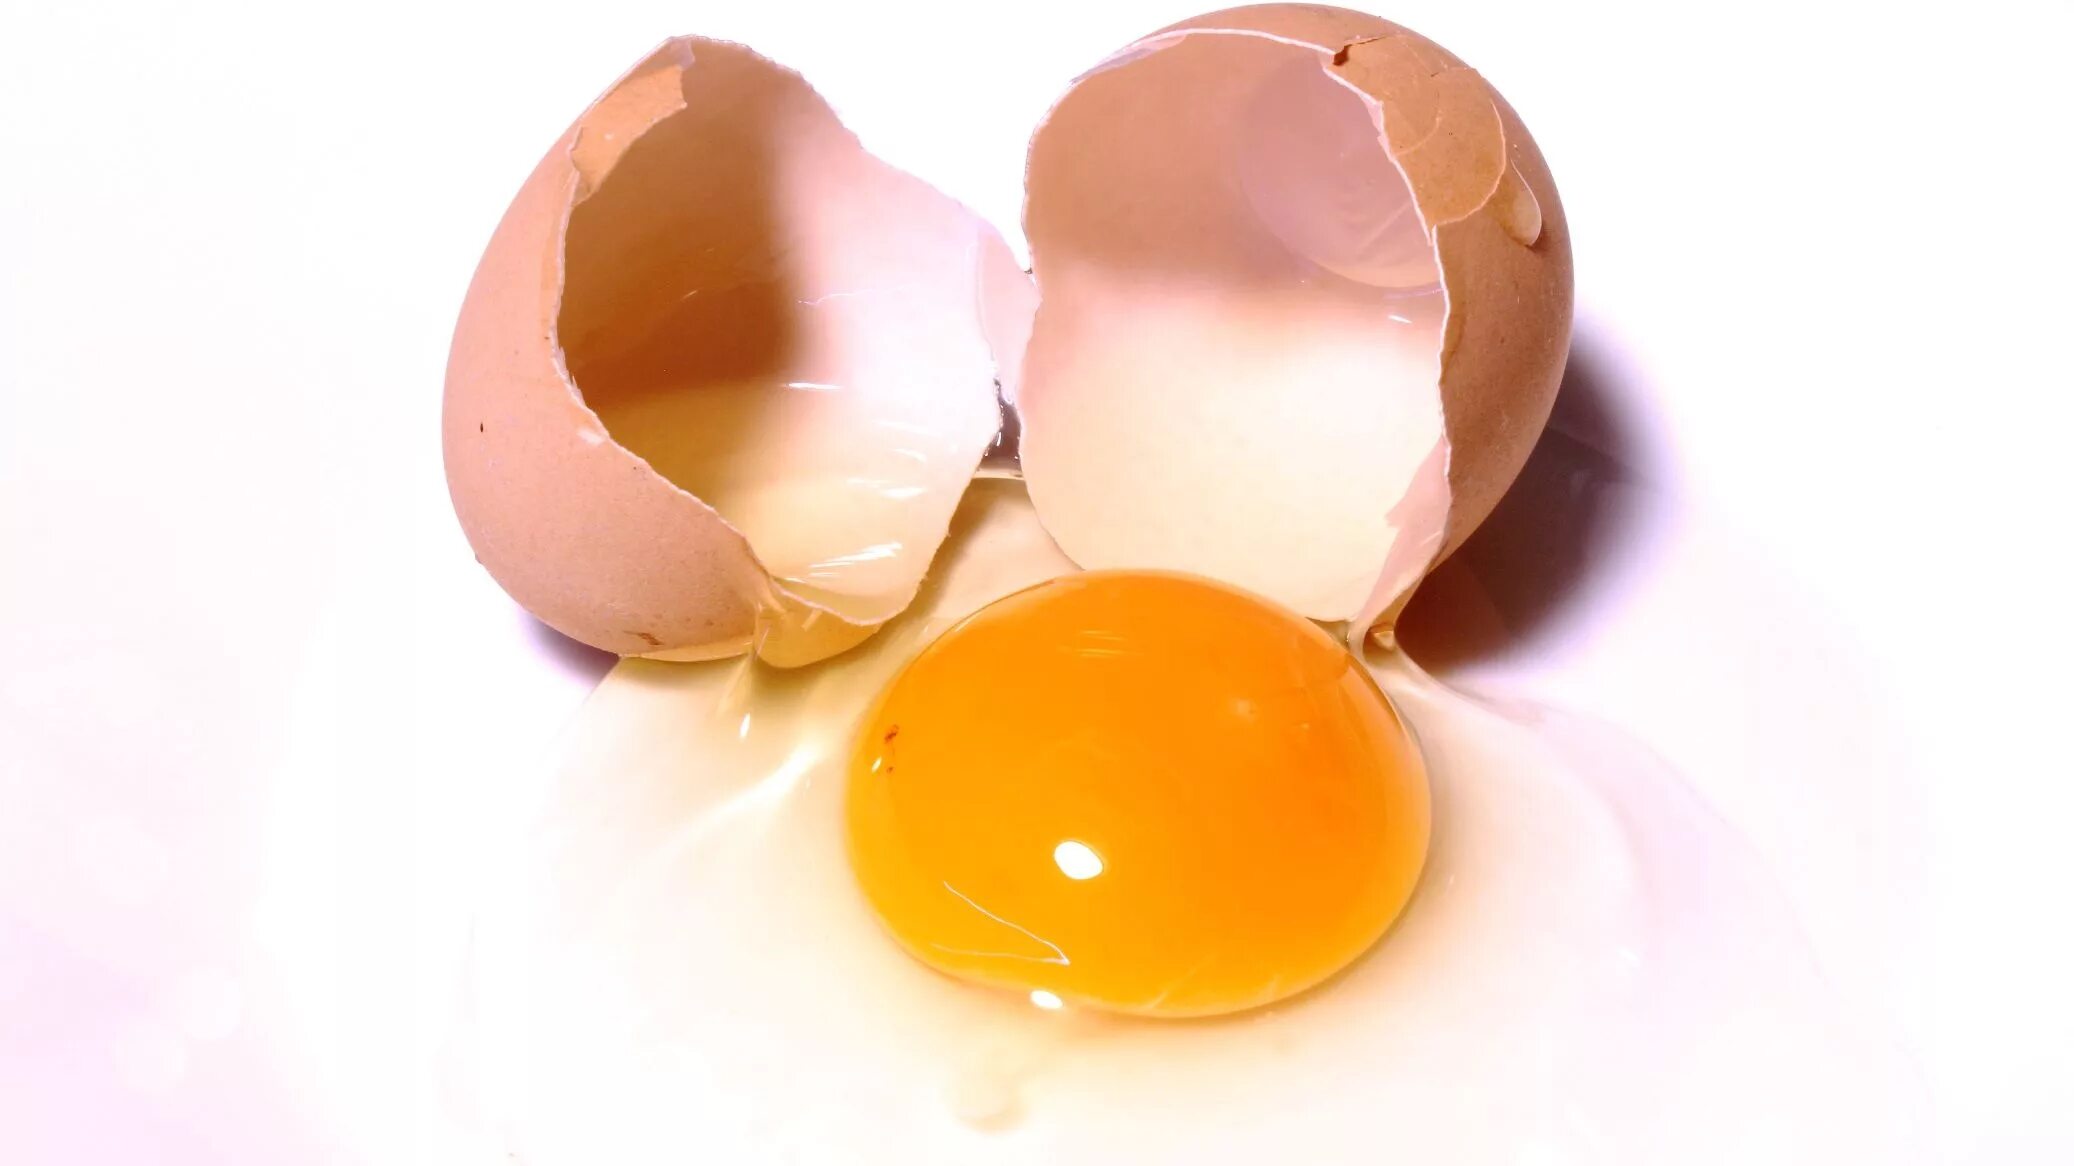 Яйцо куриное. Разбитое куриное яйцо. Куриный желток. Яичный желток. К чему снится разбитое сырое яйцо женщине